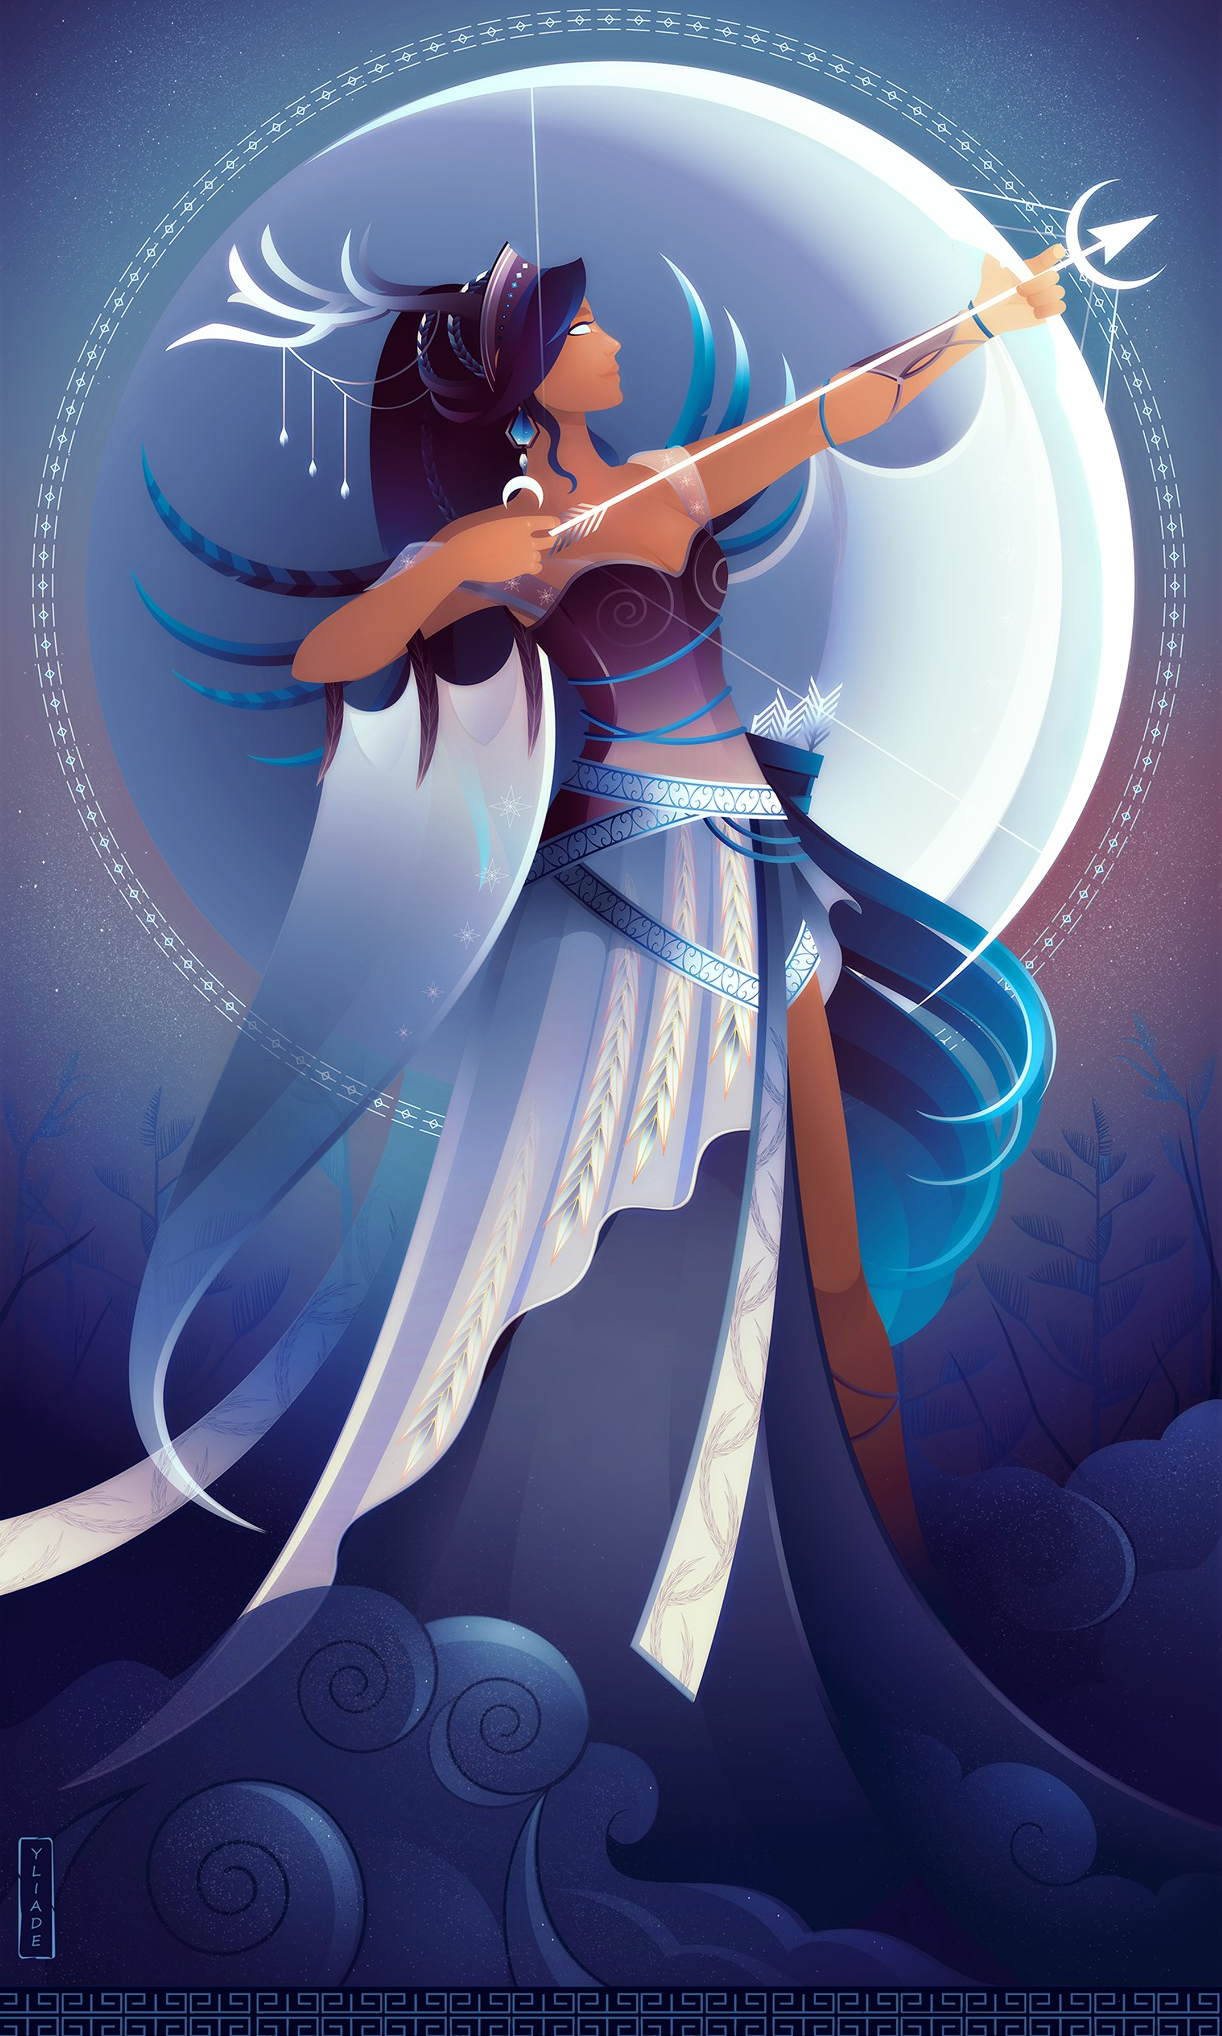 artemis goddess of the hunt and moon anime